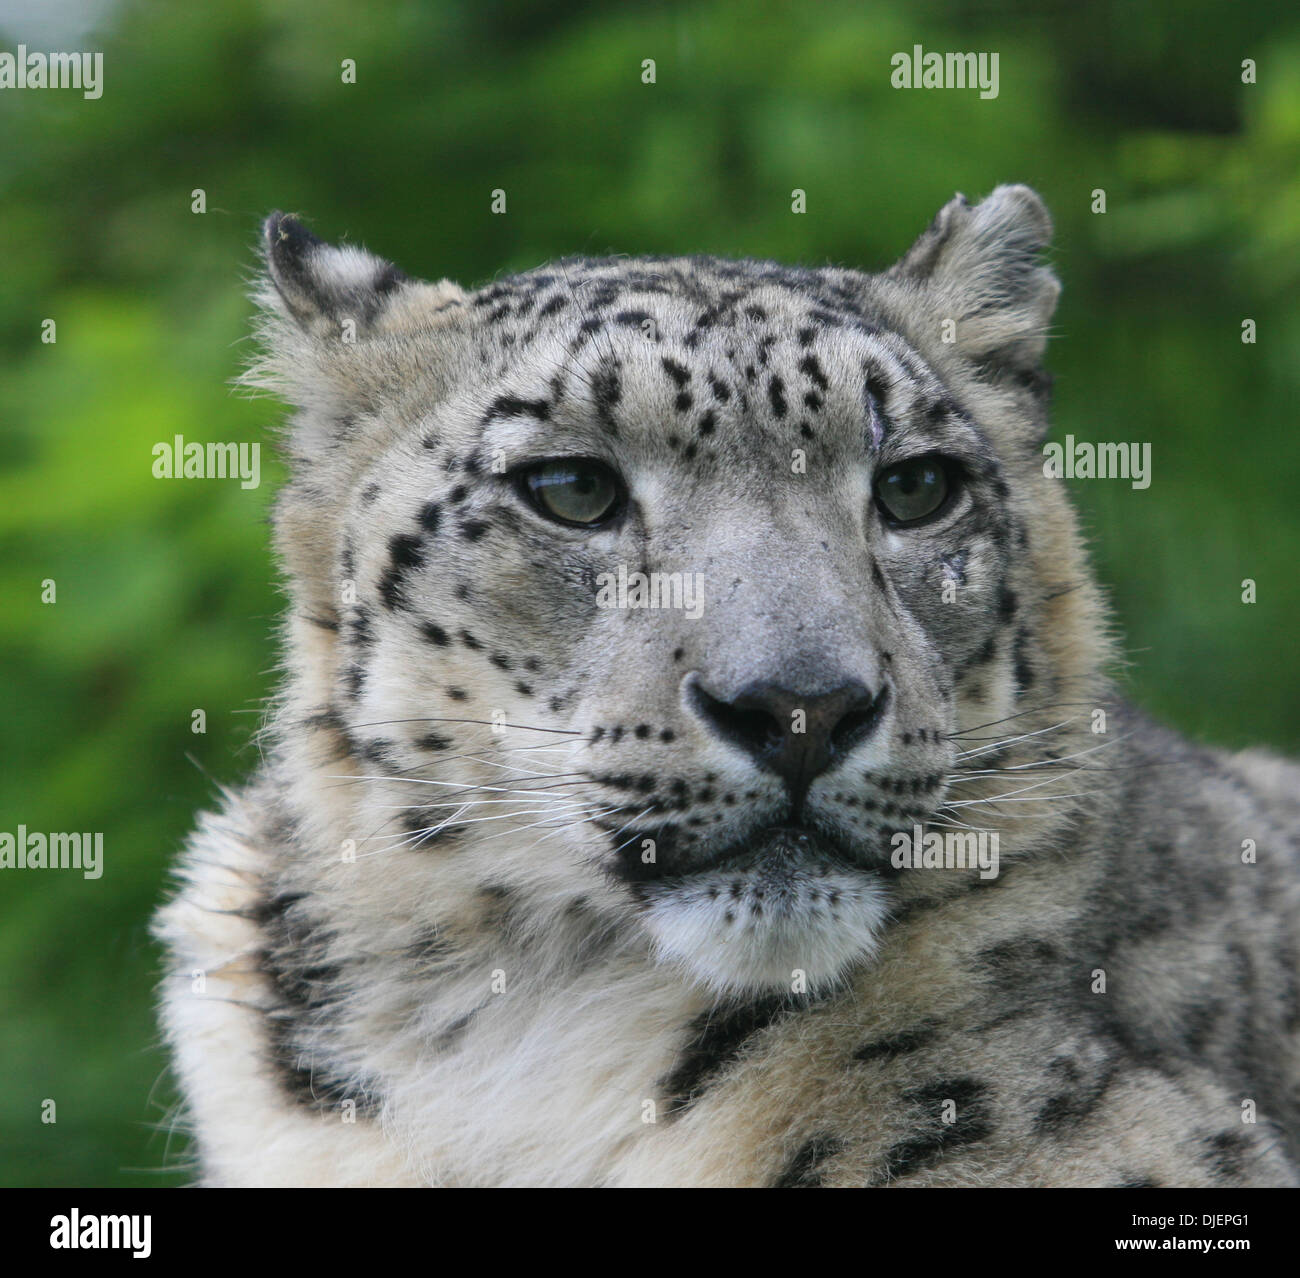 Rare Snow Leopard's Face Stock Photo